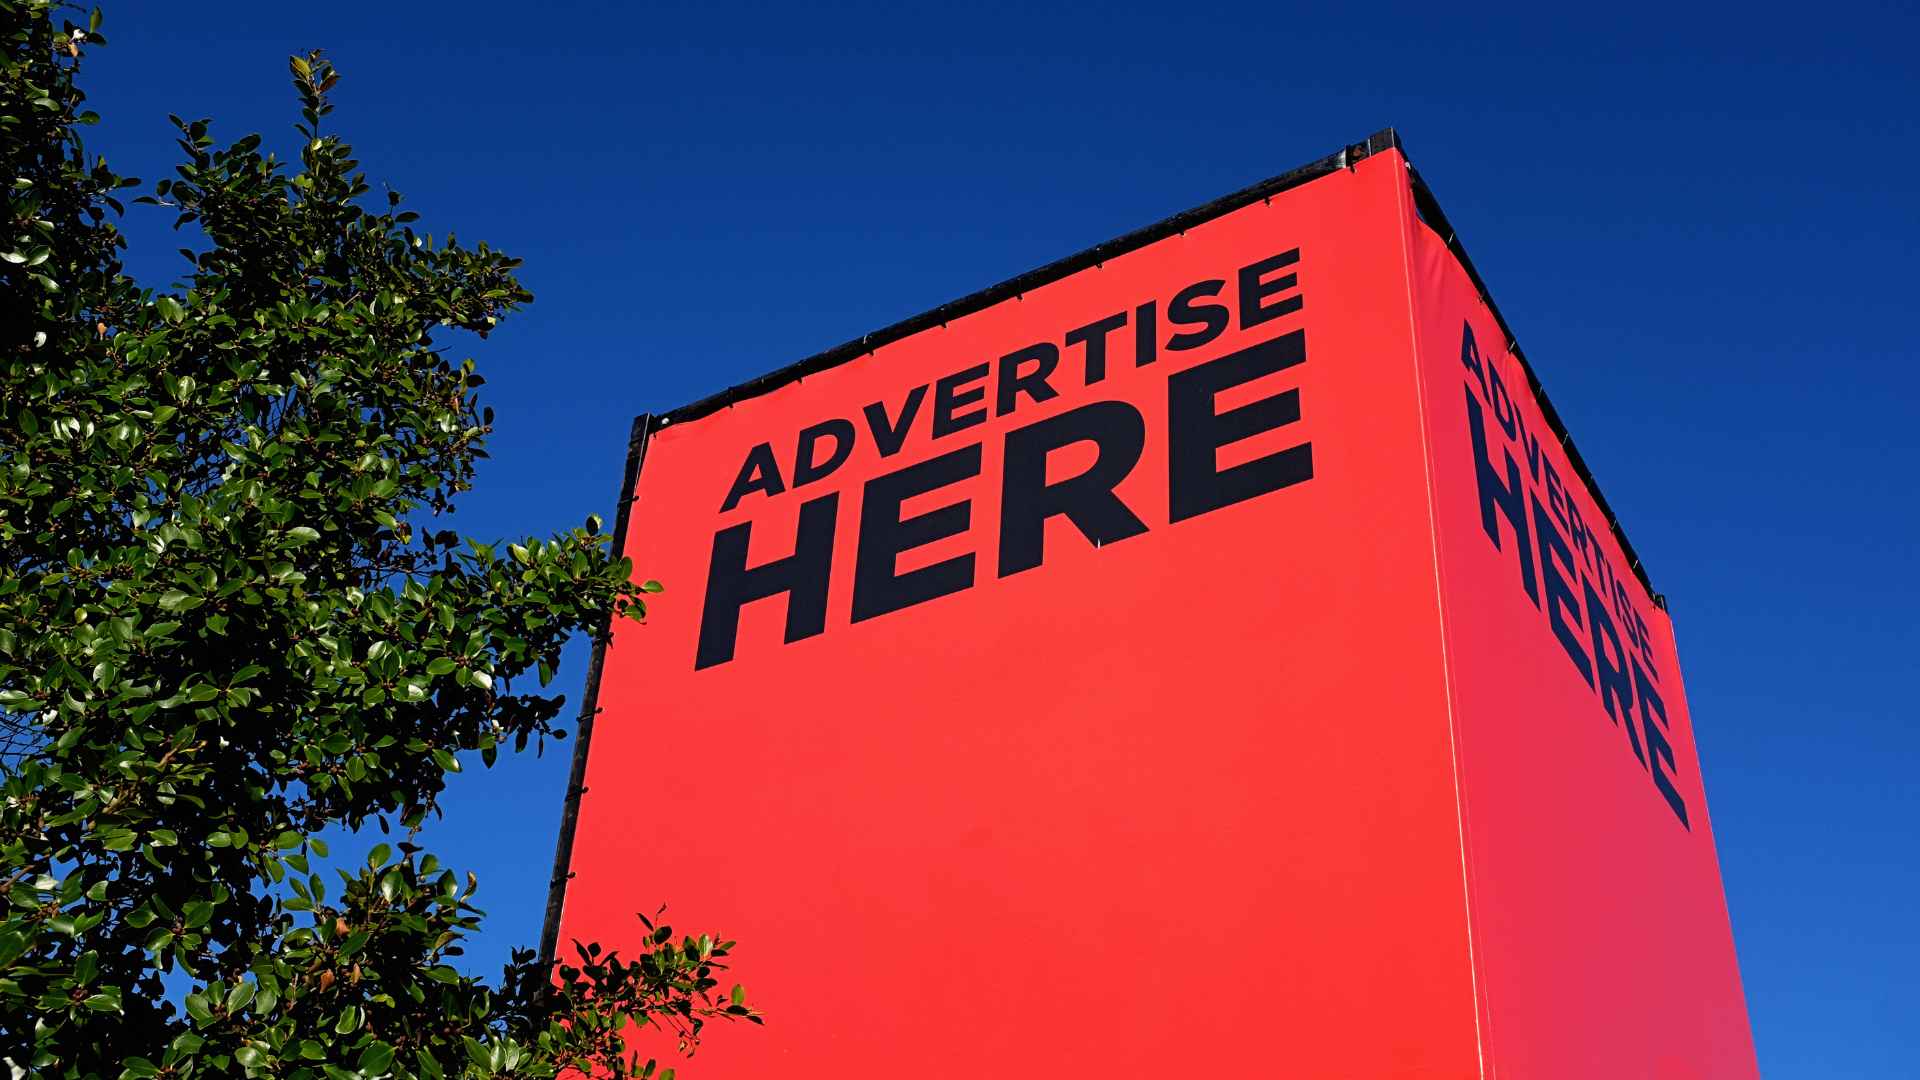 Sondlo & Knopp Advertising Agency South Africa Media Buying And Advertising In Outdoor Billboard Media